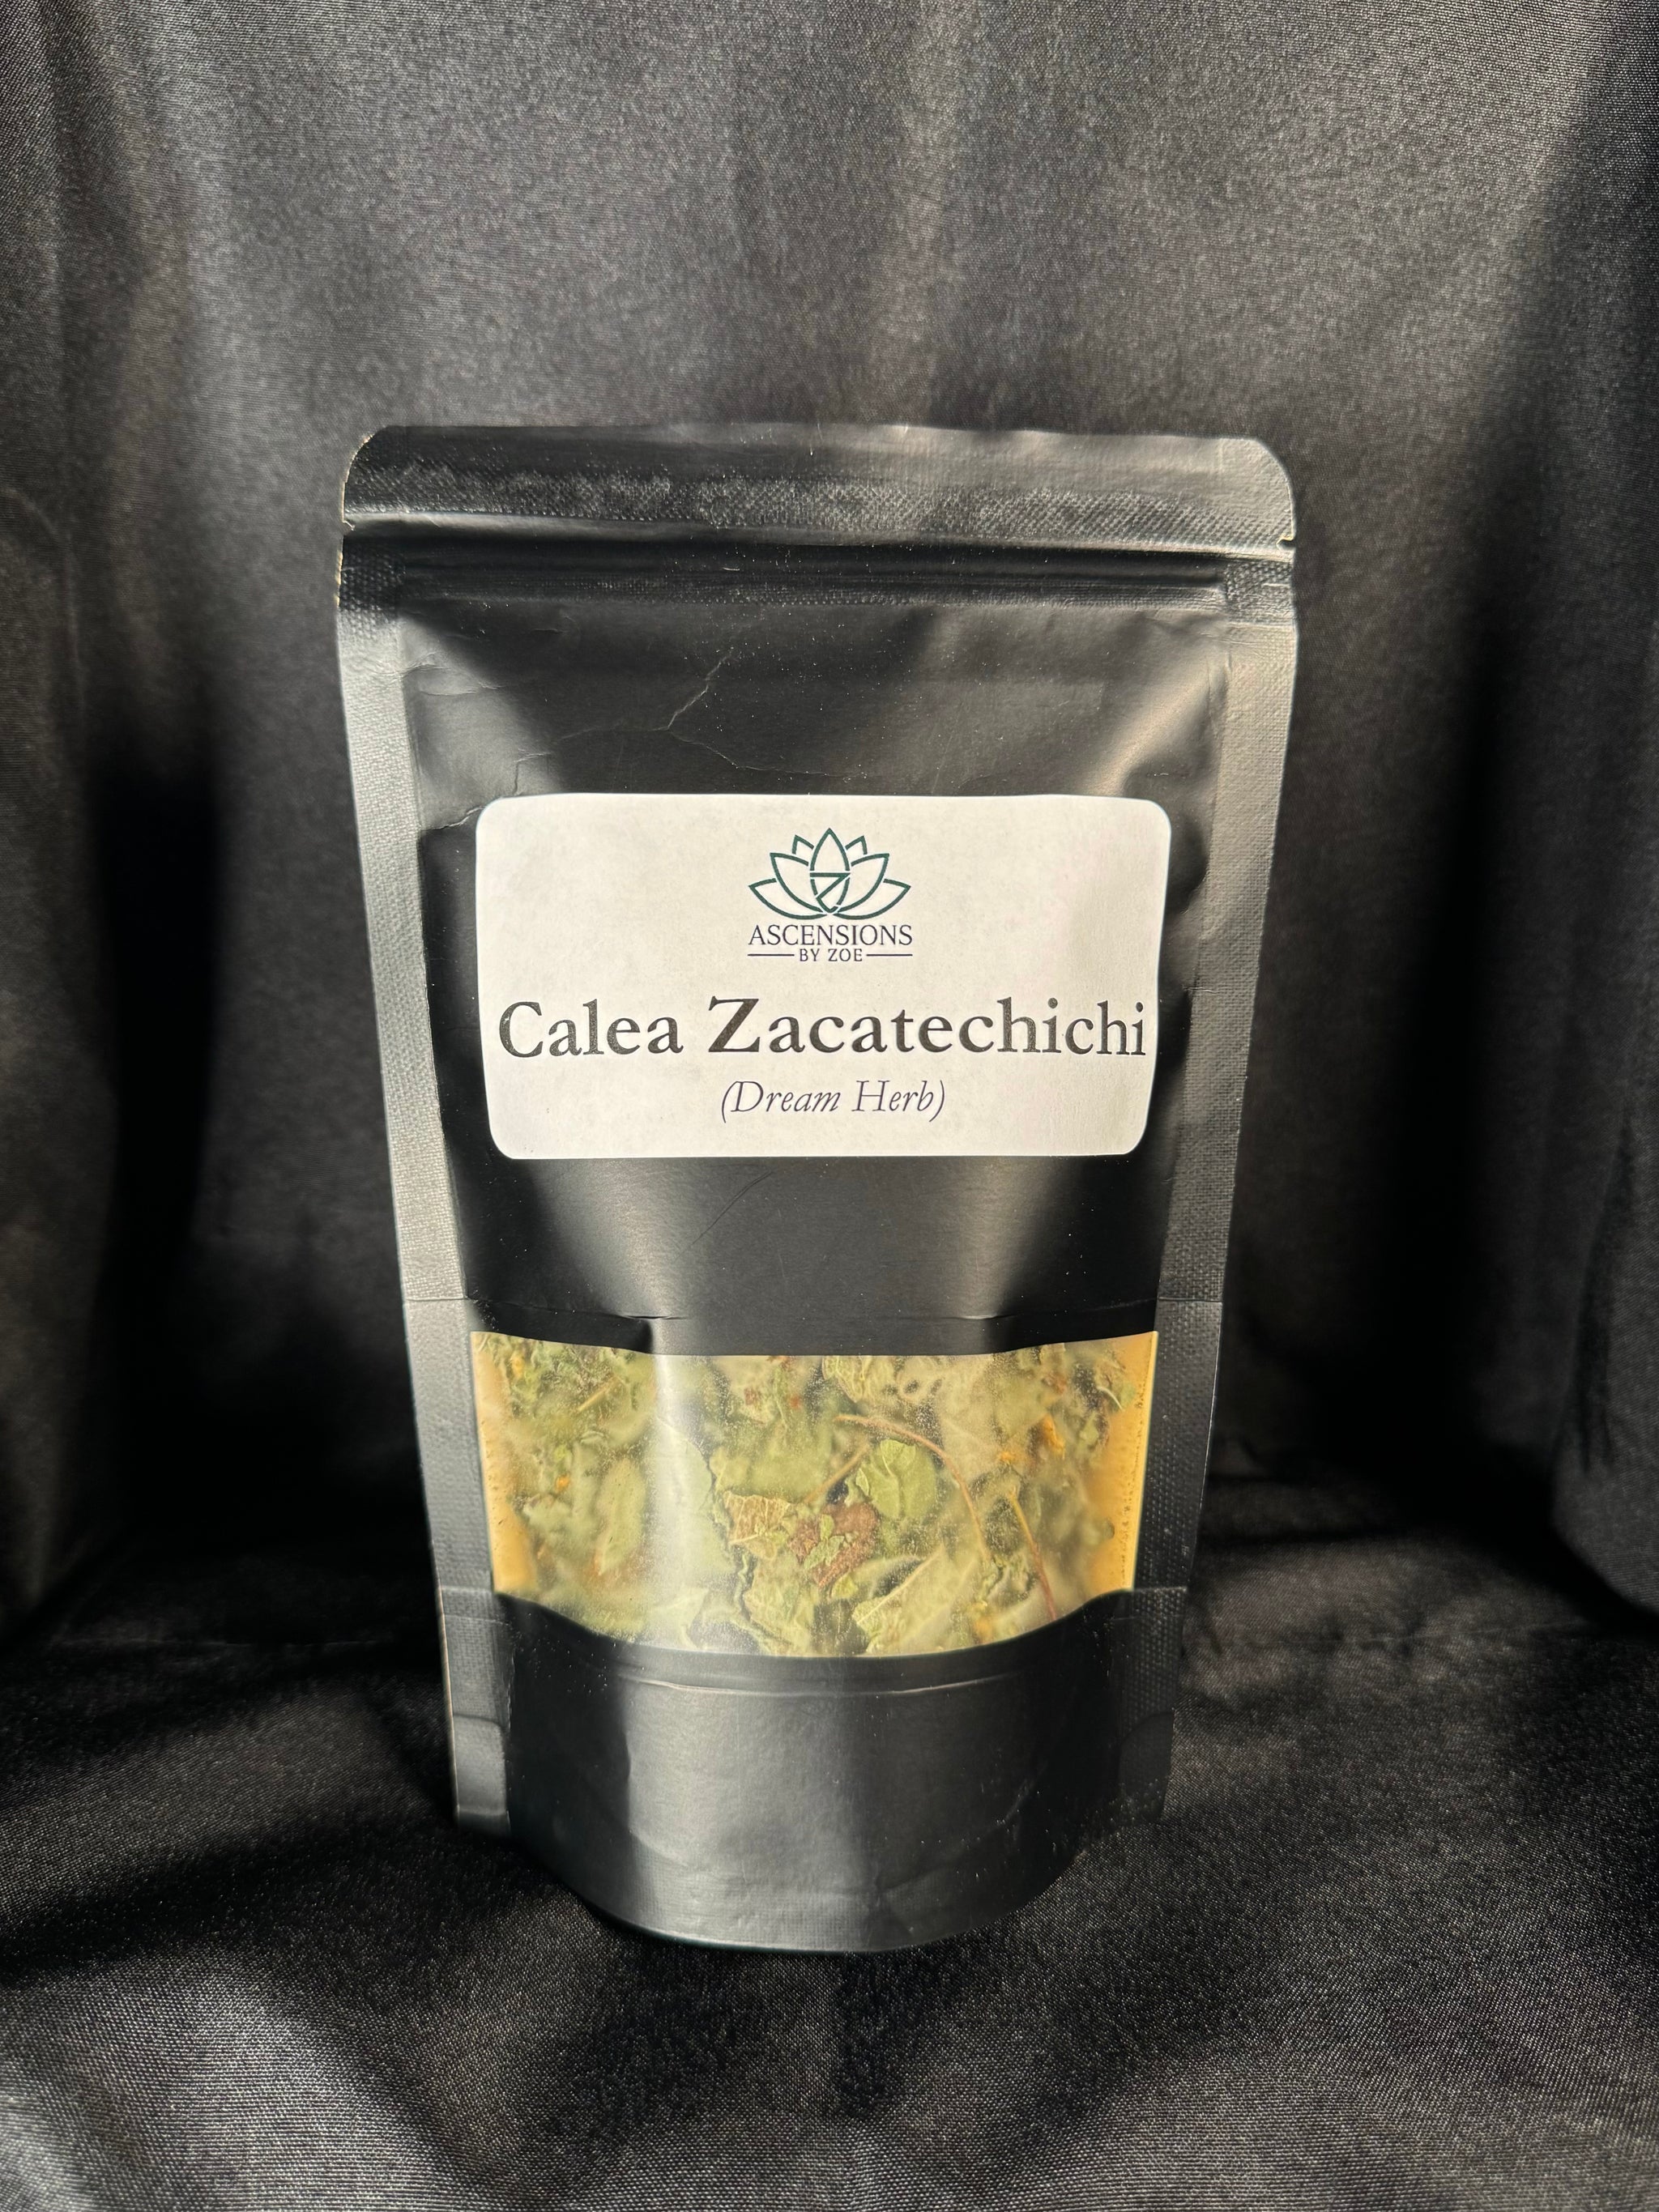 Calea Zacatechichi (Dream Herb)